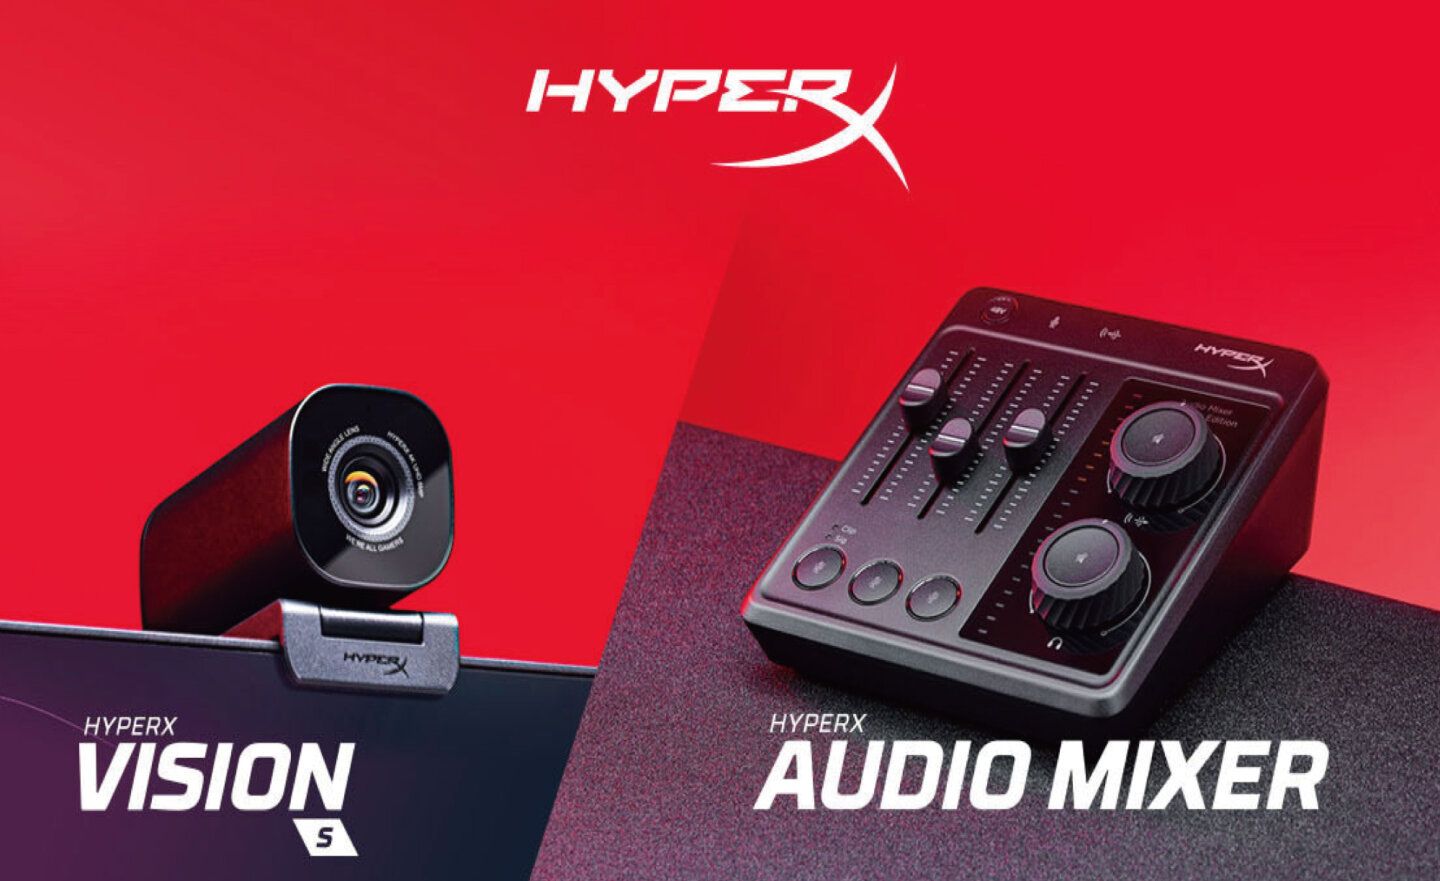 HyperX 推首款 Vision S 網路攝影機、Mixer 音訊混音器，以及全透明設計的遊戲控制器